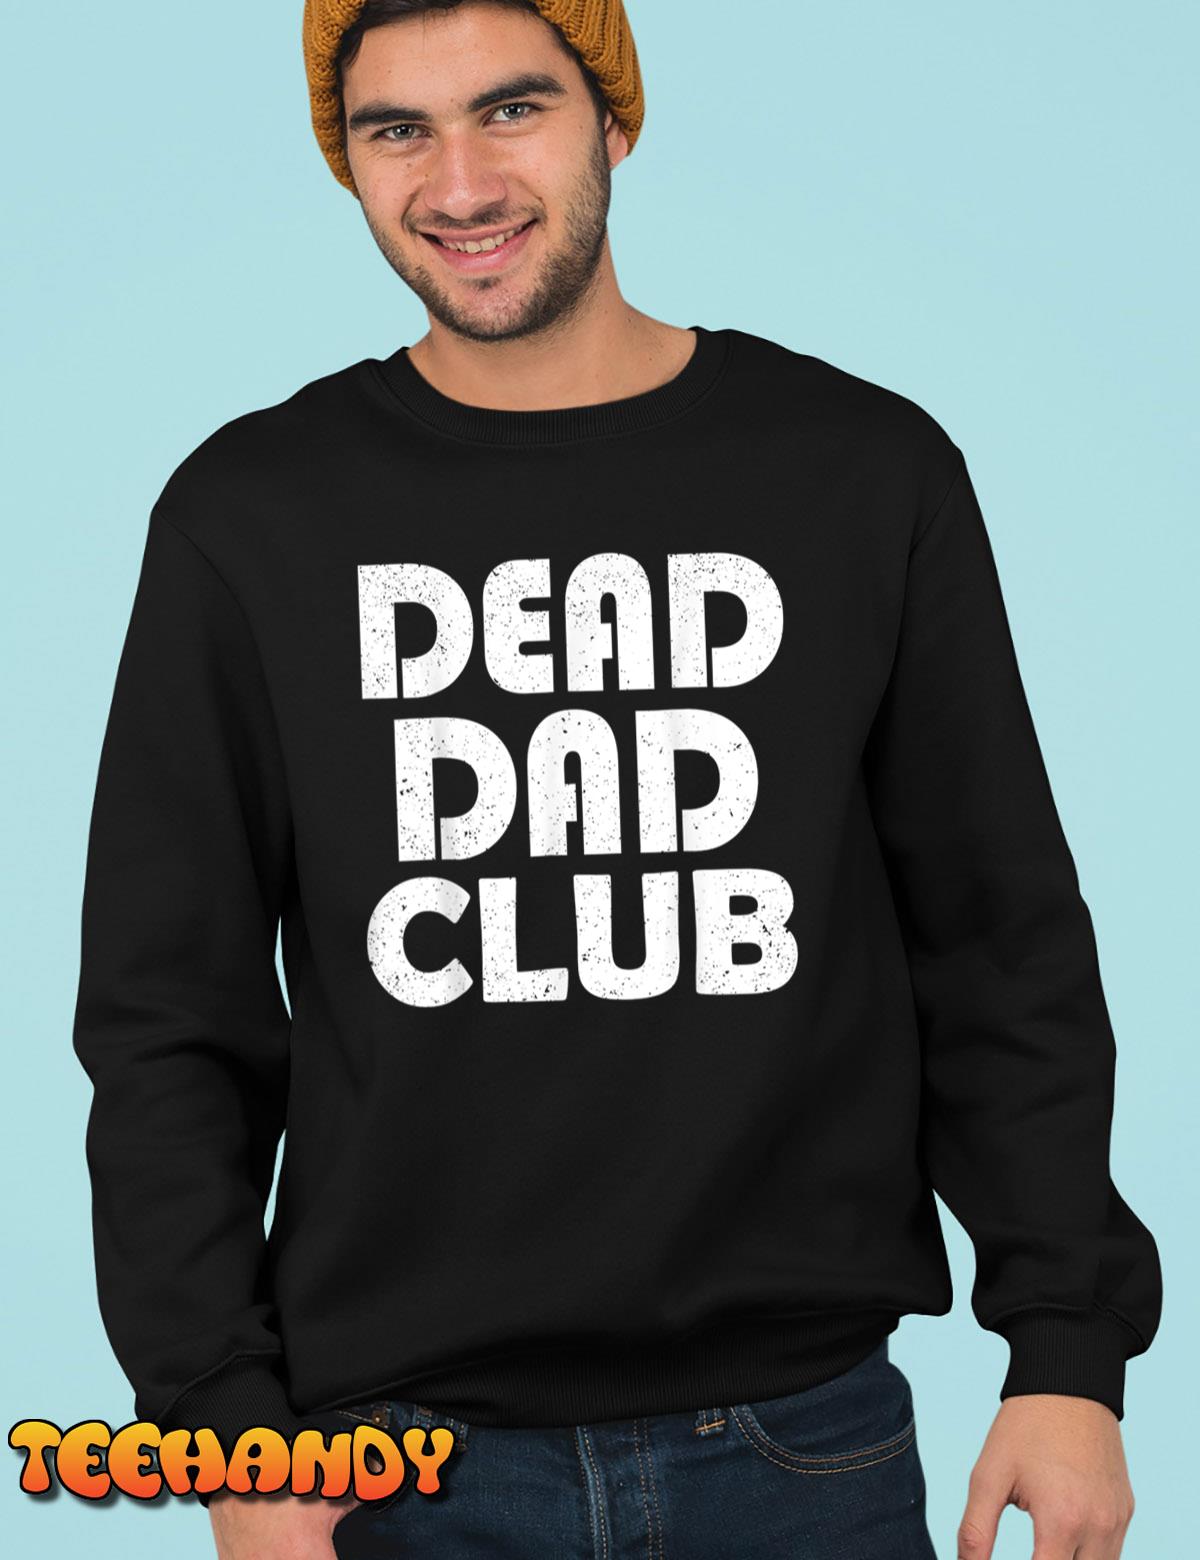 Dead Dad Club Vintage Funny Saying T Shirt